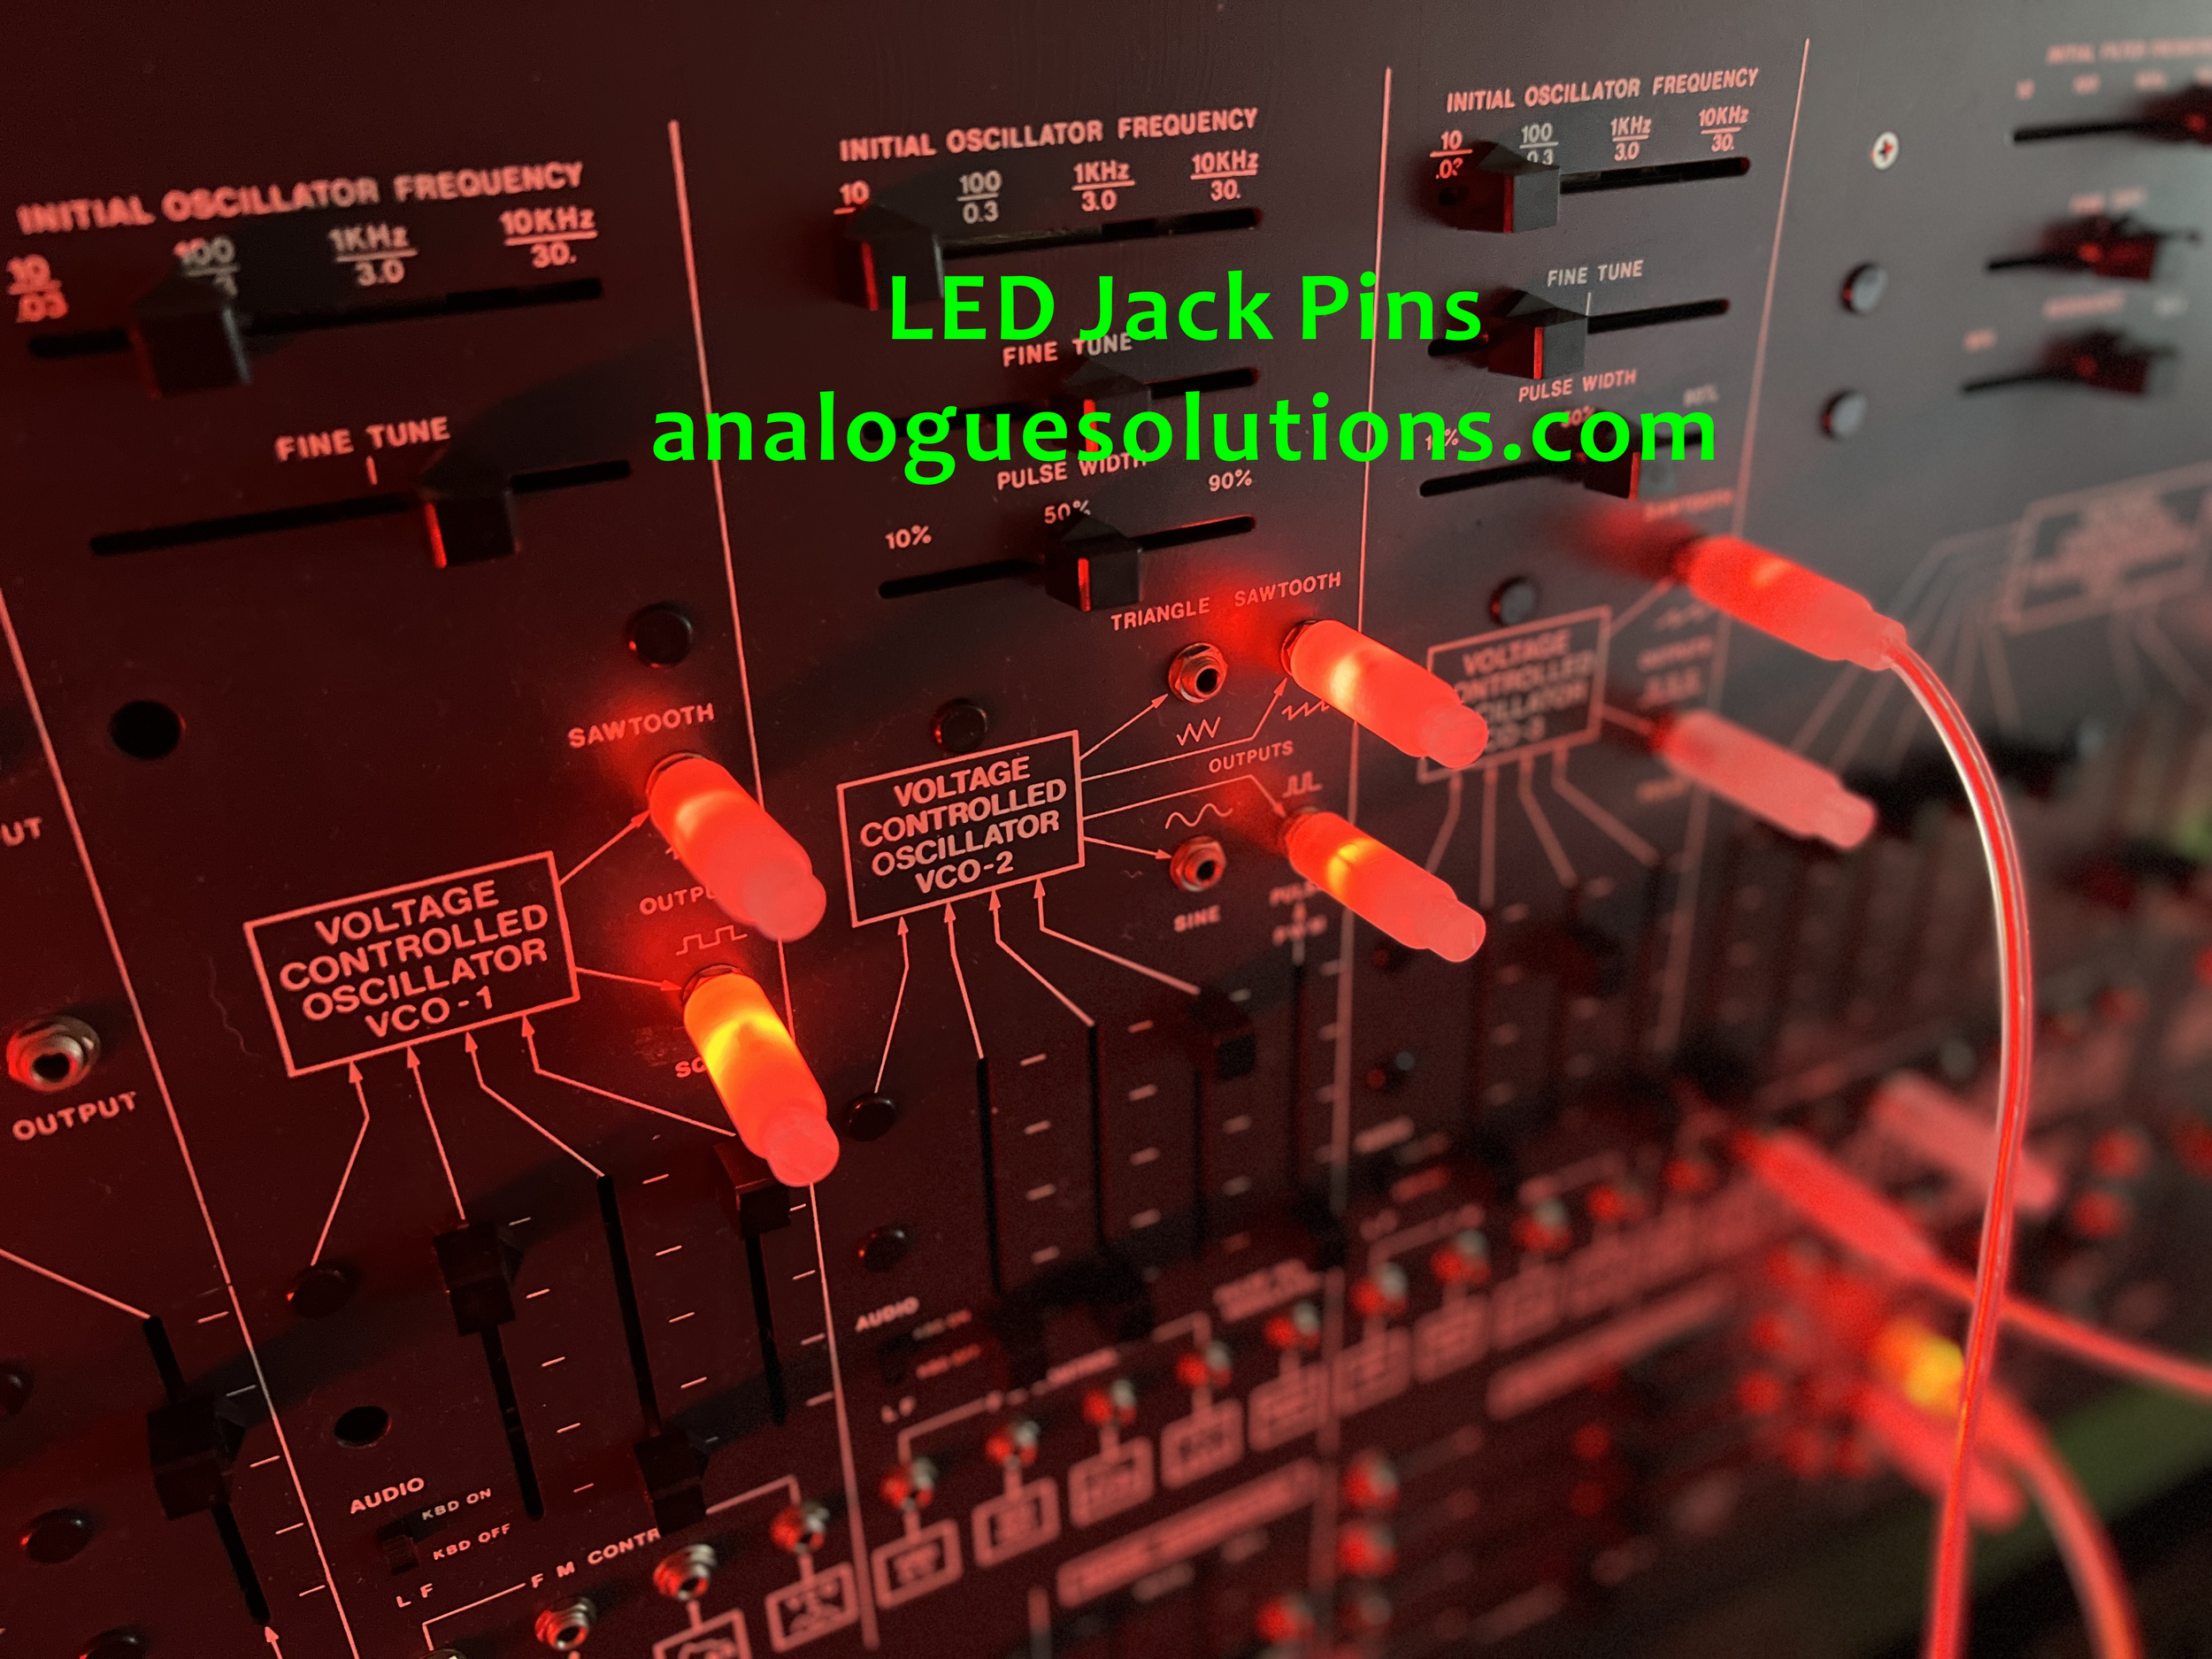 analogue solutions LED CV jack pin ARP2600.png